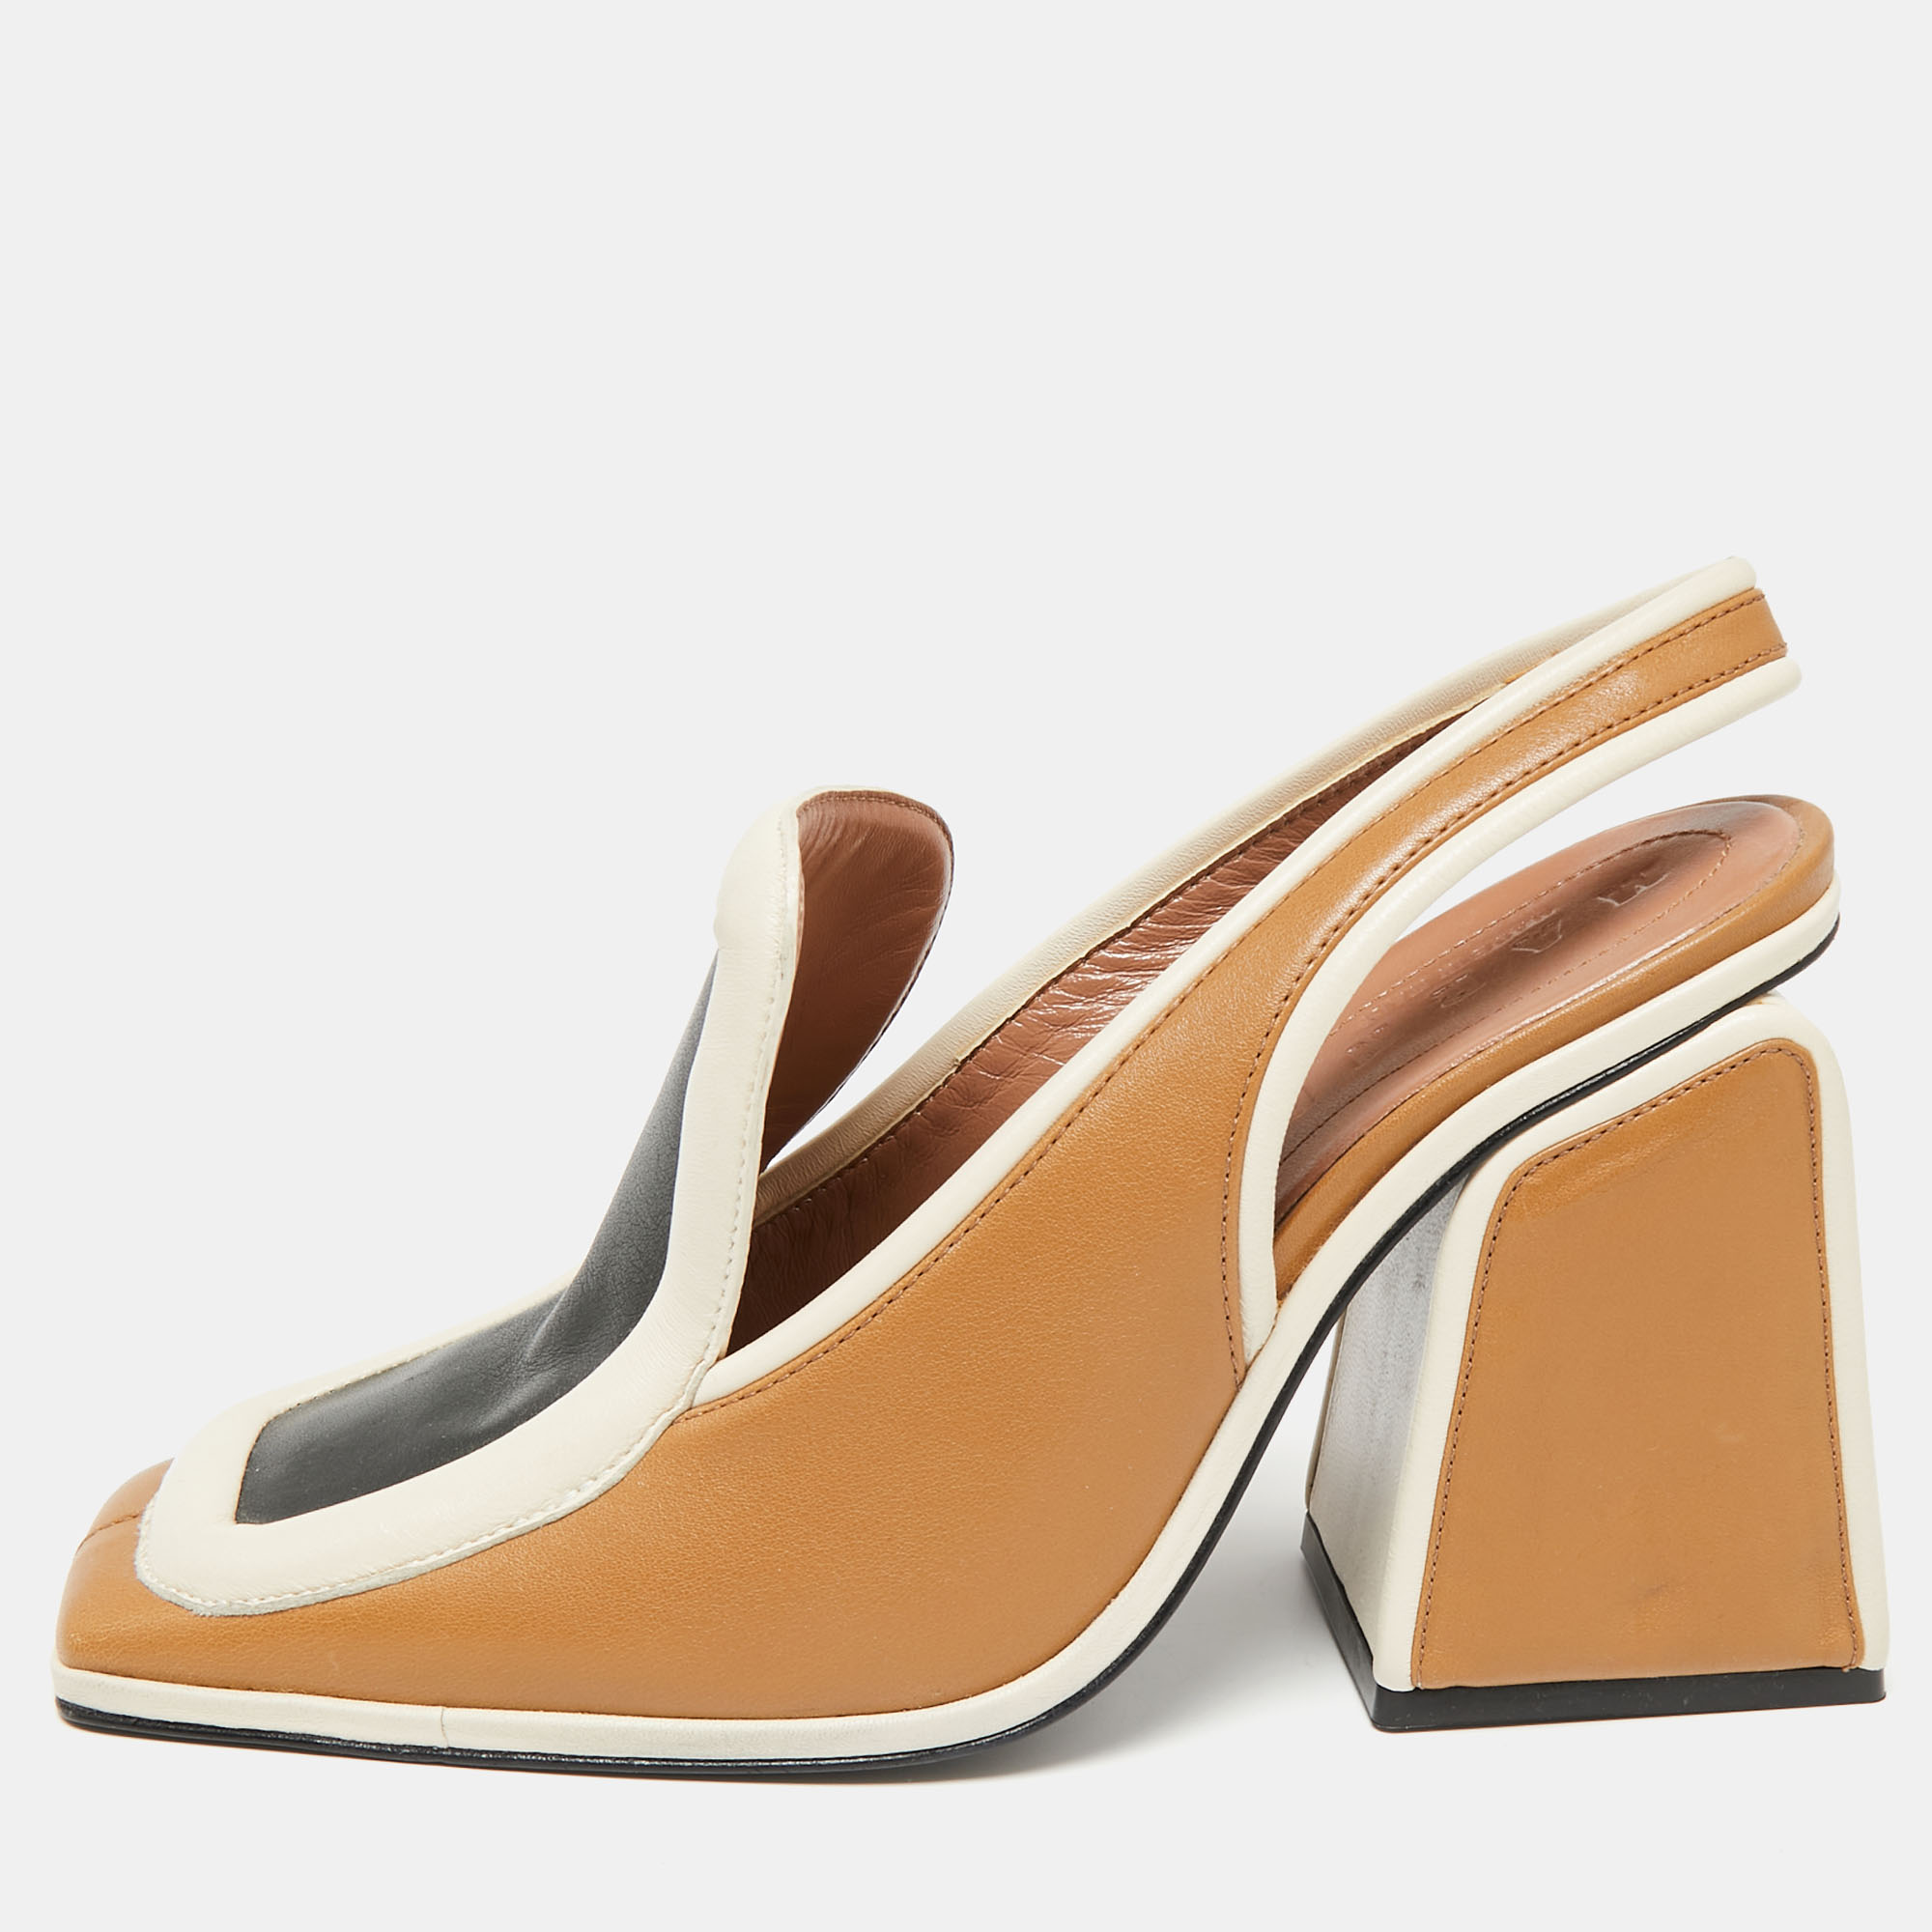 Marni tri-color leather square toe block heel slingback sandals size 37